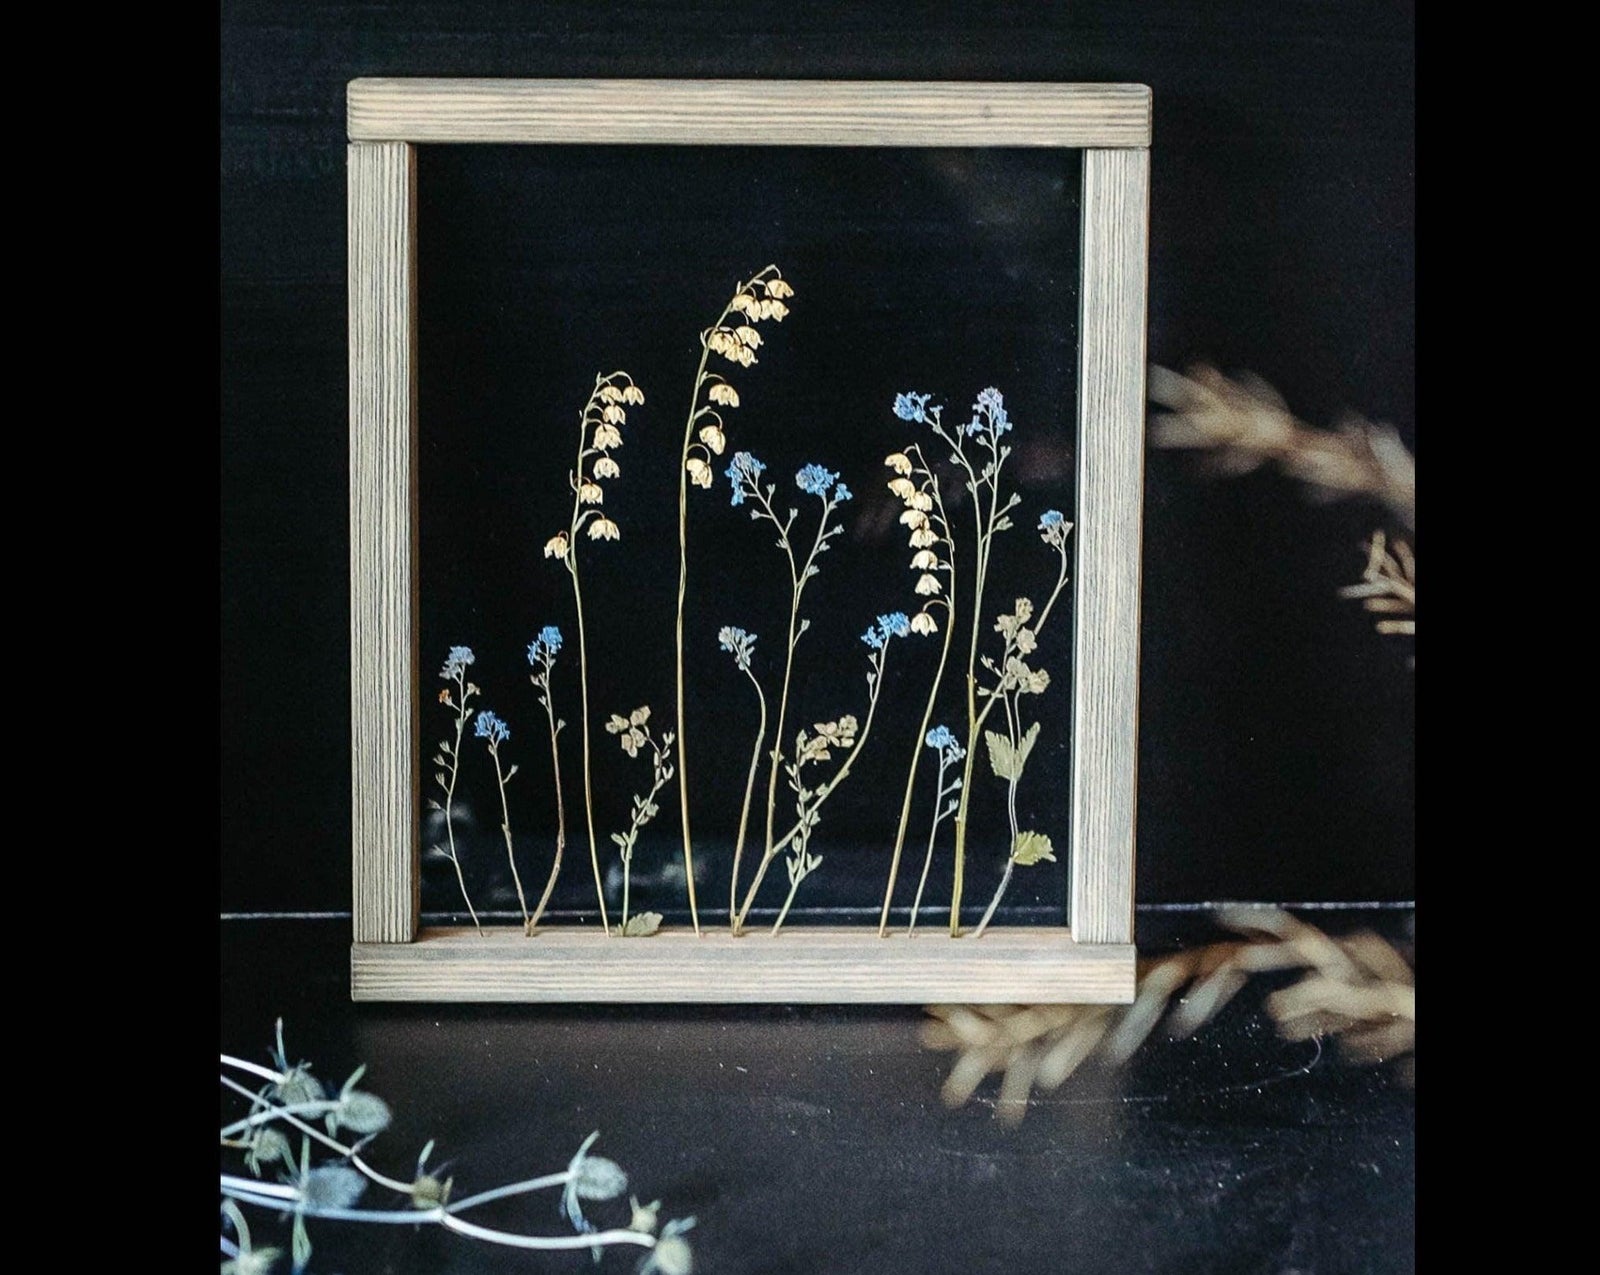 Pressed flowers frame 10.5x12.5 - Cornflowers